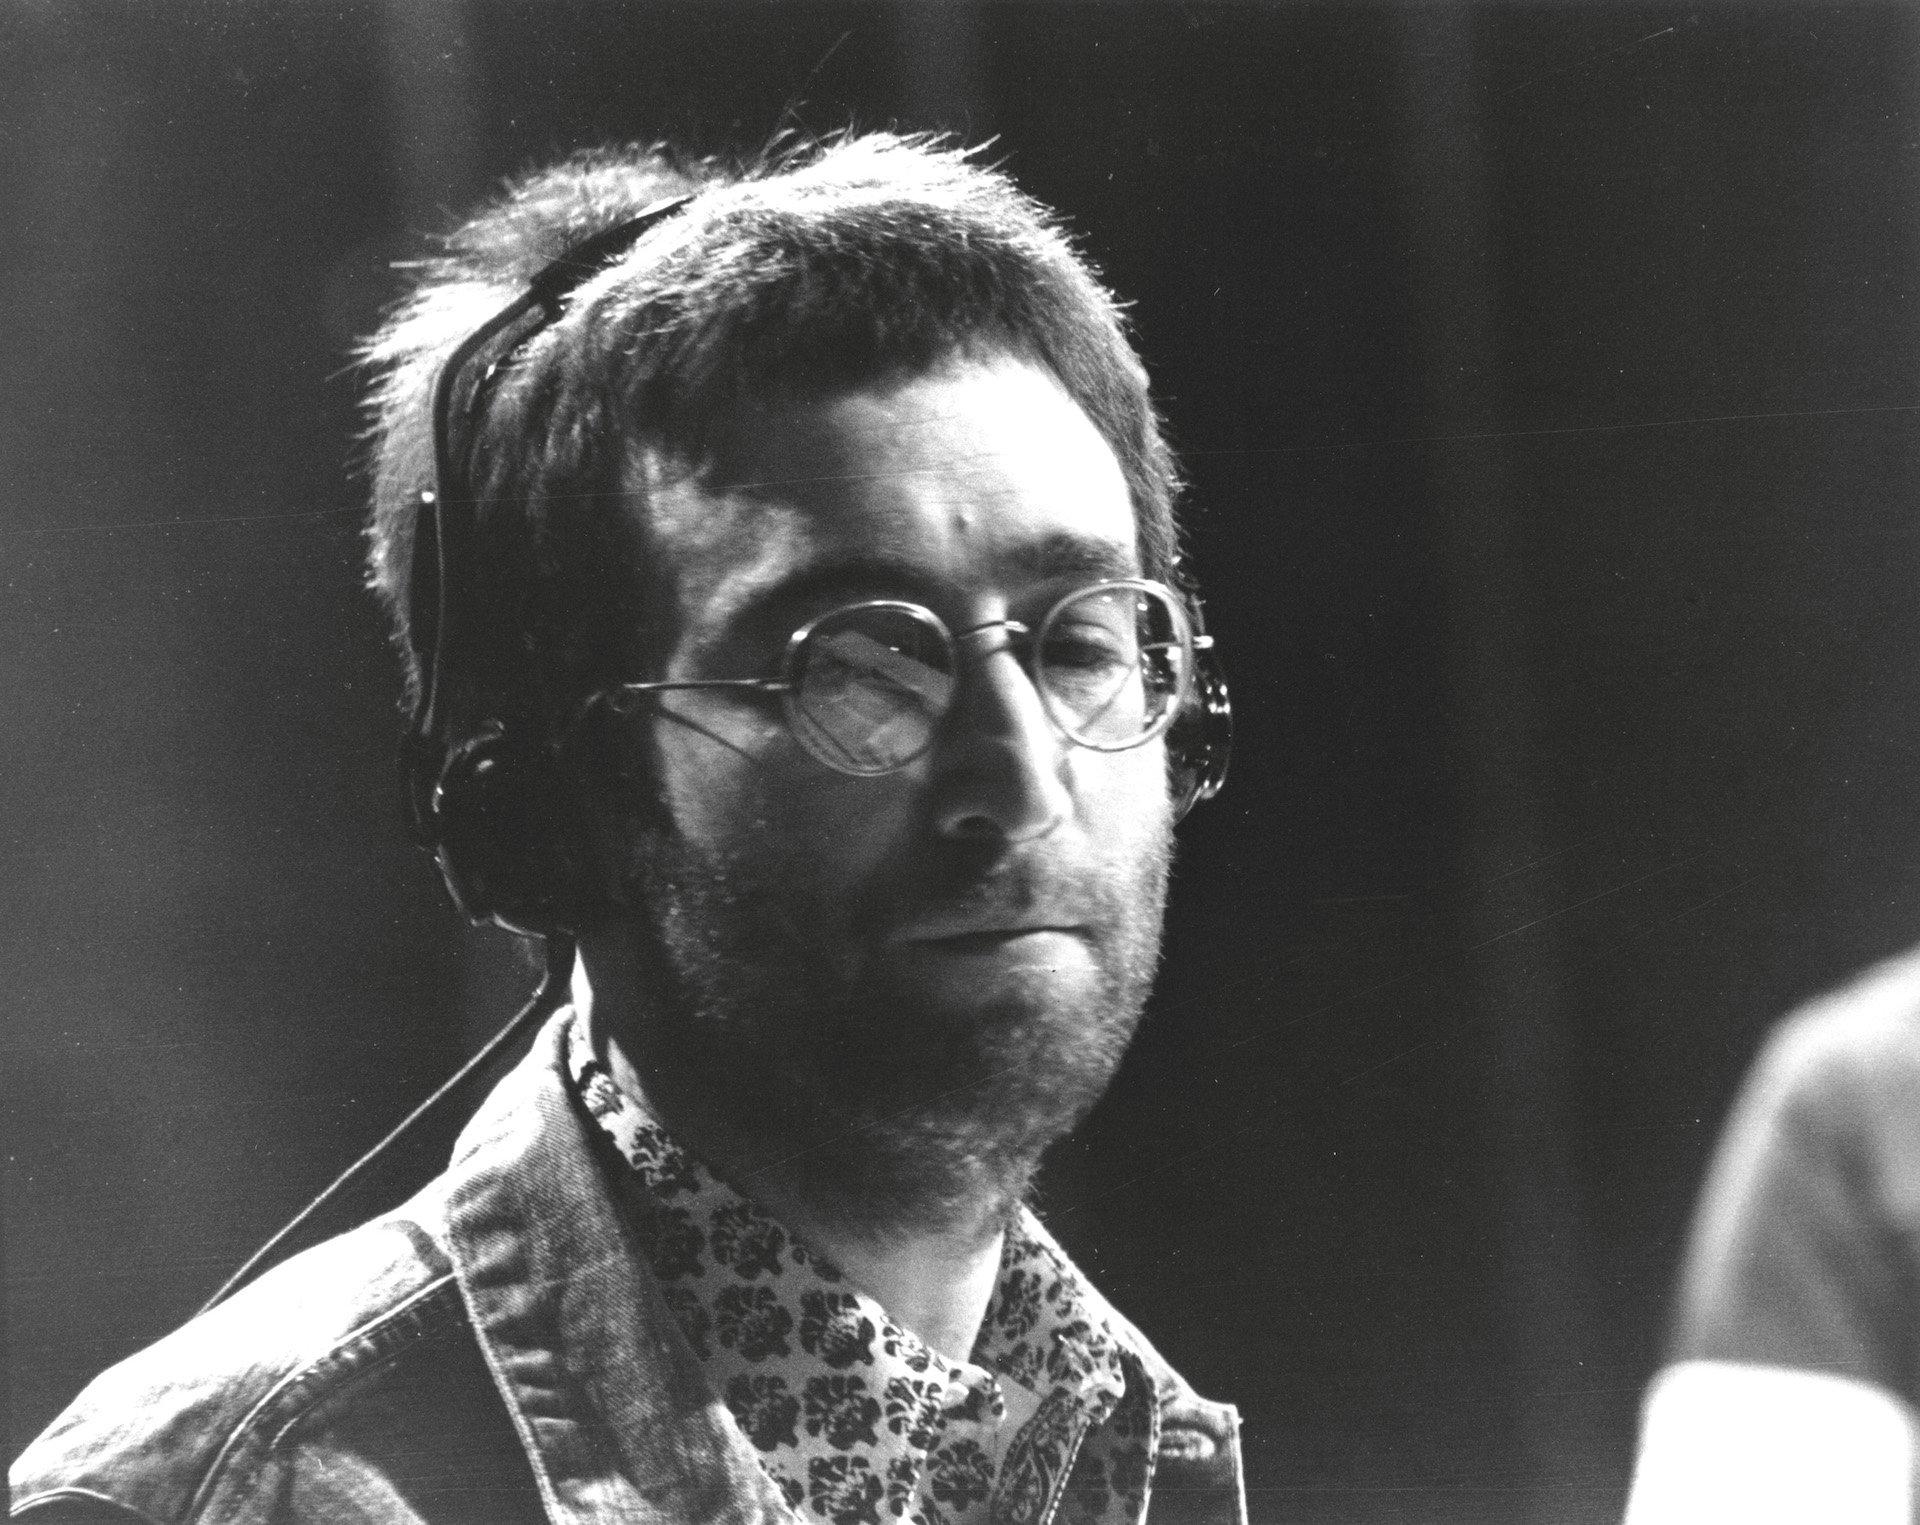 John Lennon in 1970